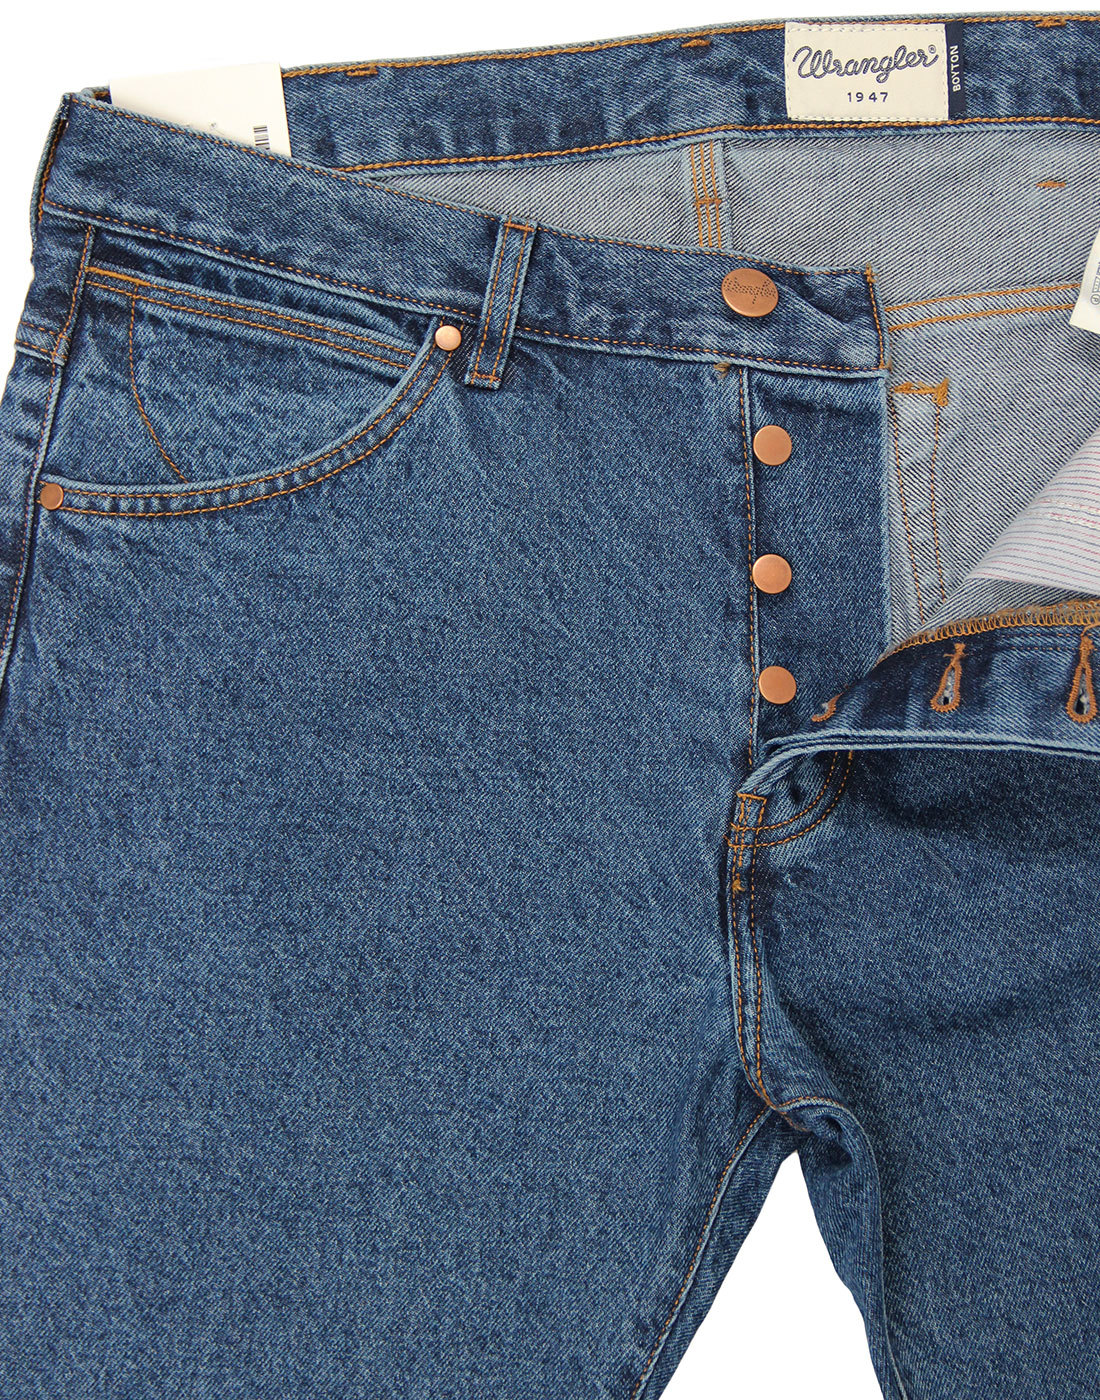 wrangler cotton jeans